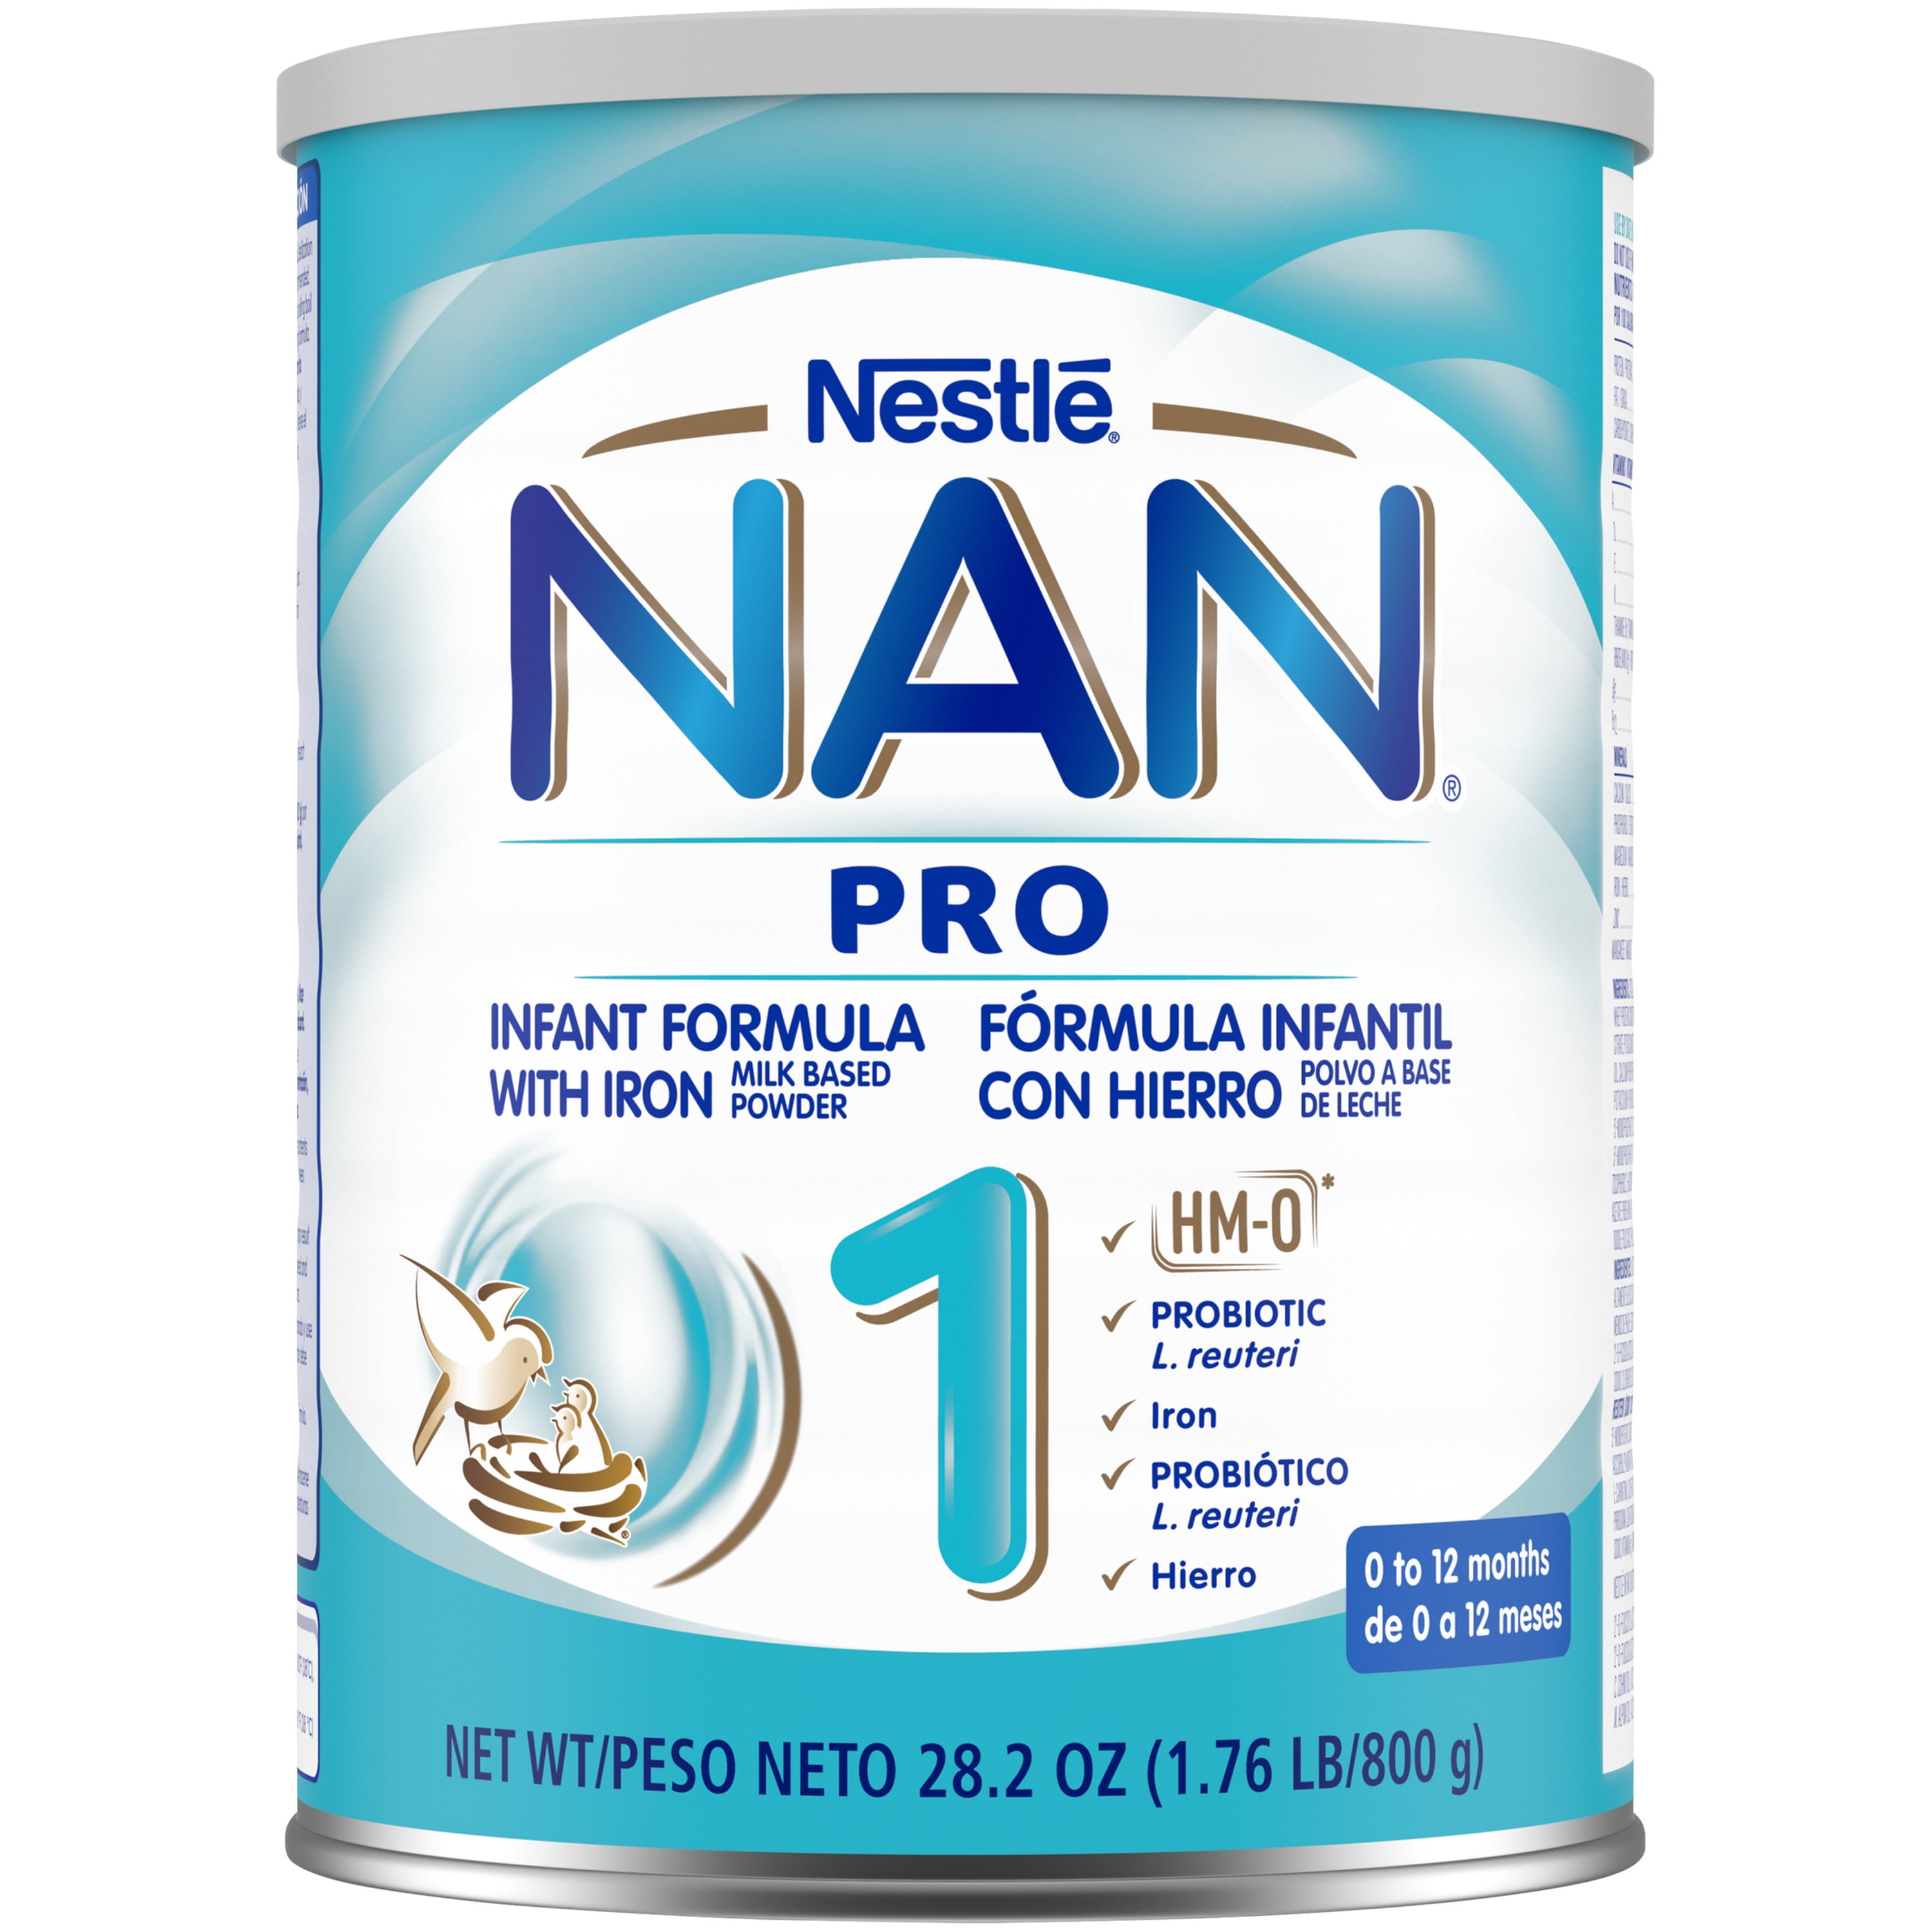 1 Can Nestle NAN Supreme Pro 1 Baby/Infant Formula 800g, Exp 5/18/2024  (NEW)